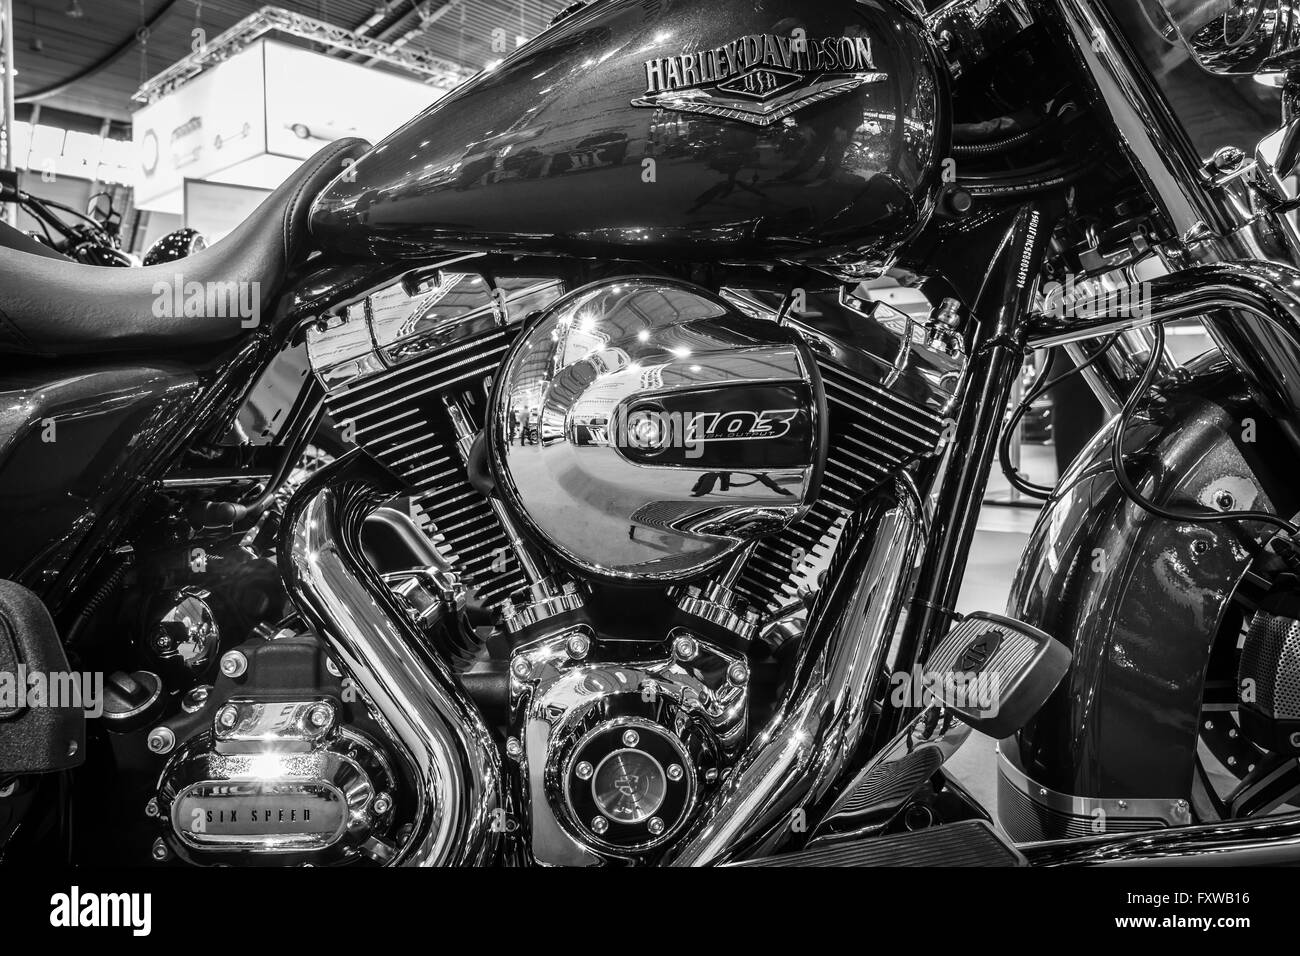 Frammento di una motocicletta Harley Davidson Road King, 2016. Foto Stock